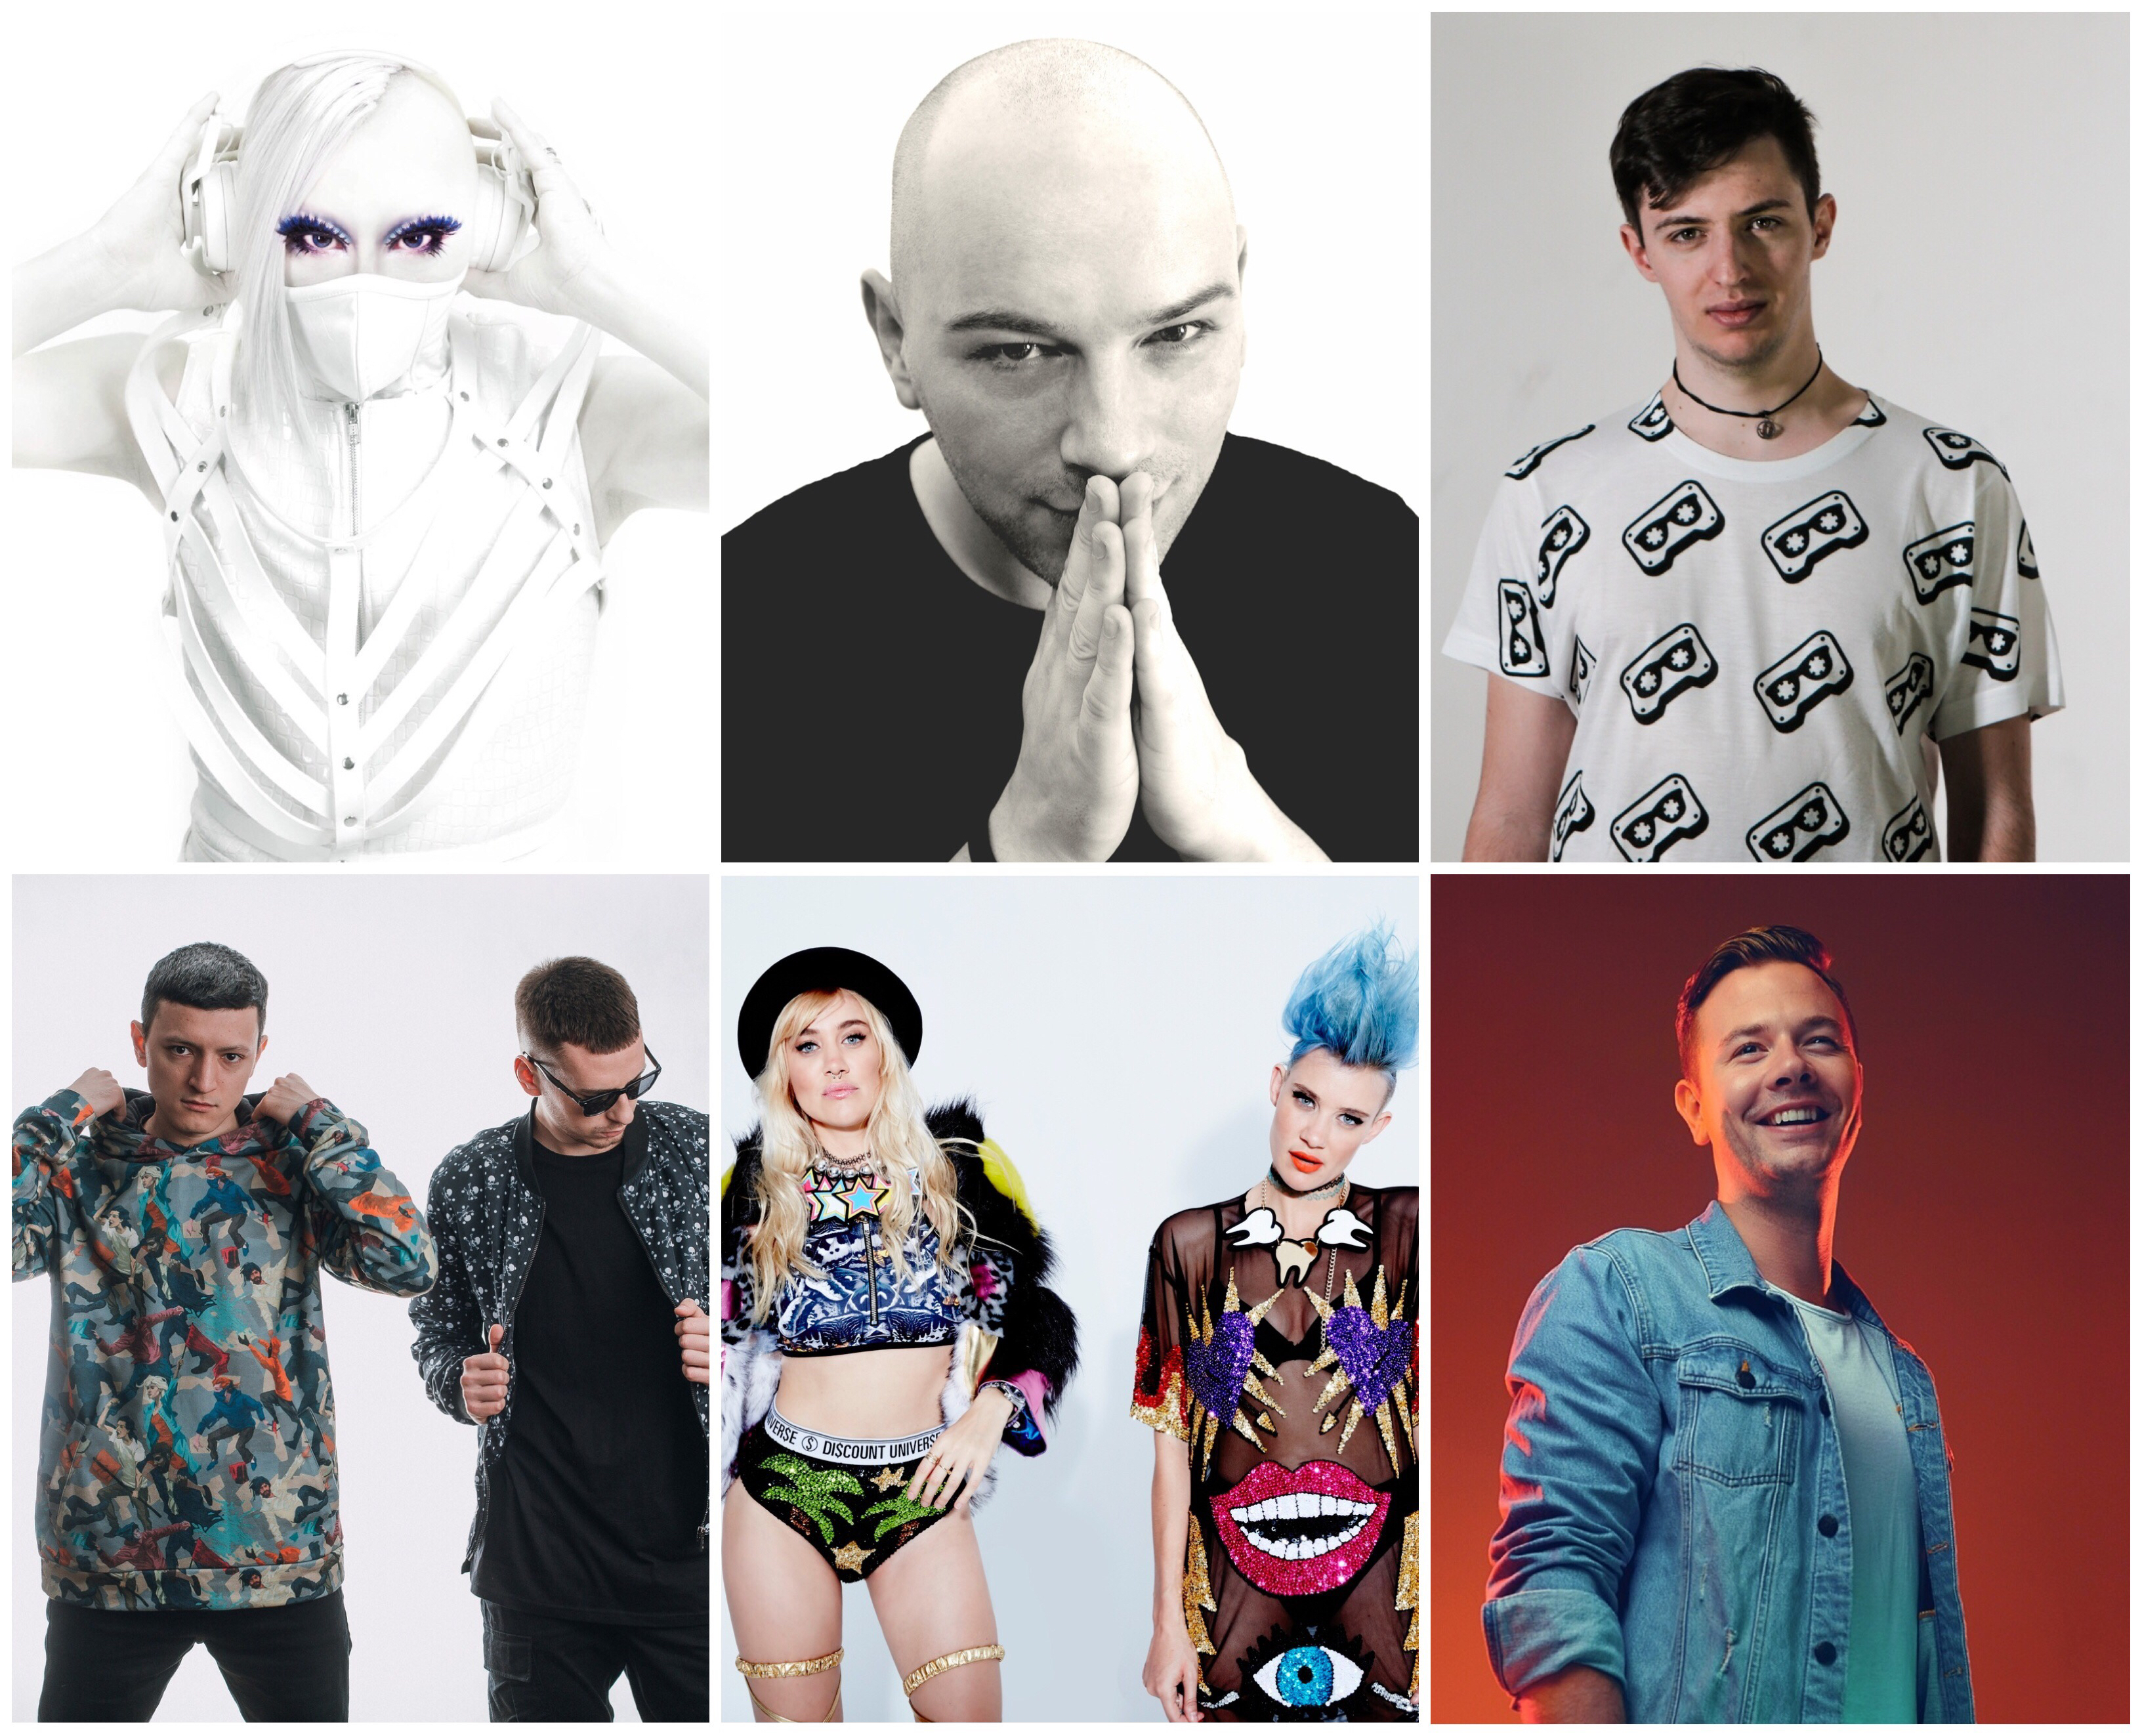 DJ MagがBetportと協力してハウスやテクノに特化したランキング「Alternative Top 100 DJs」を発表！